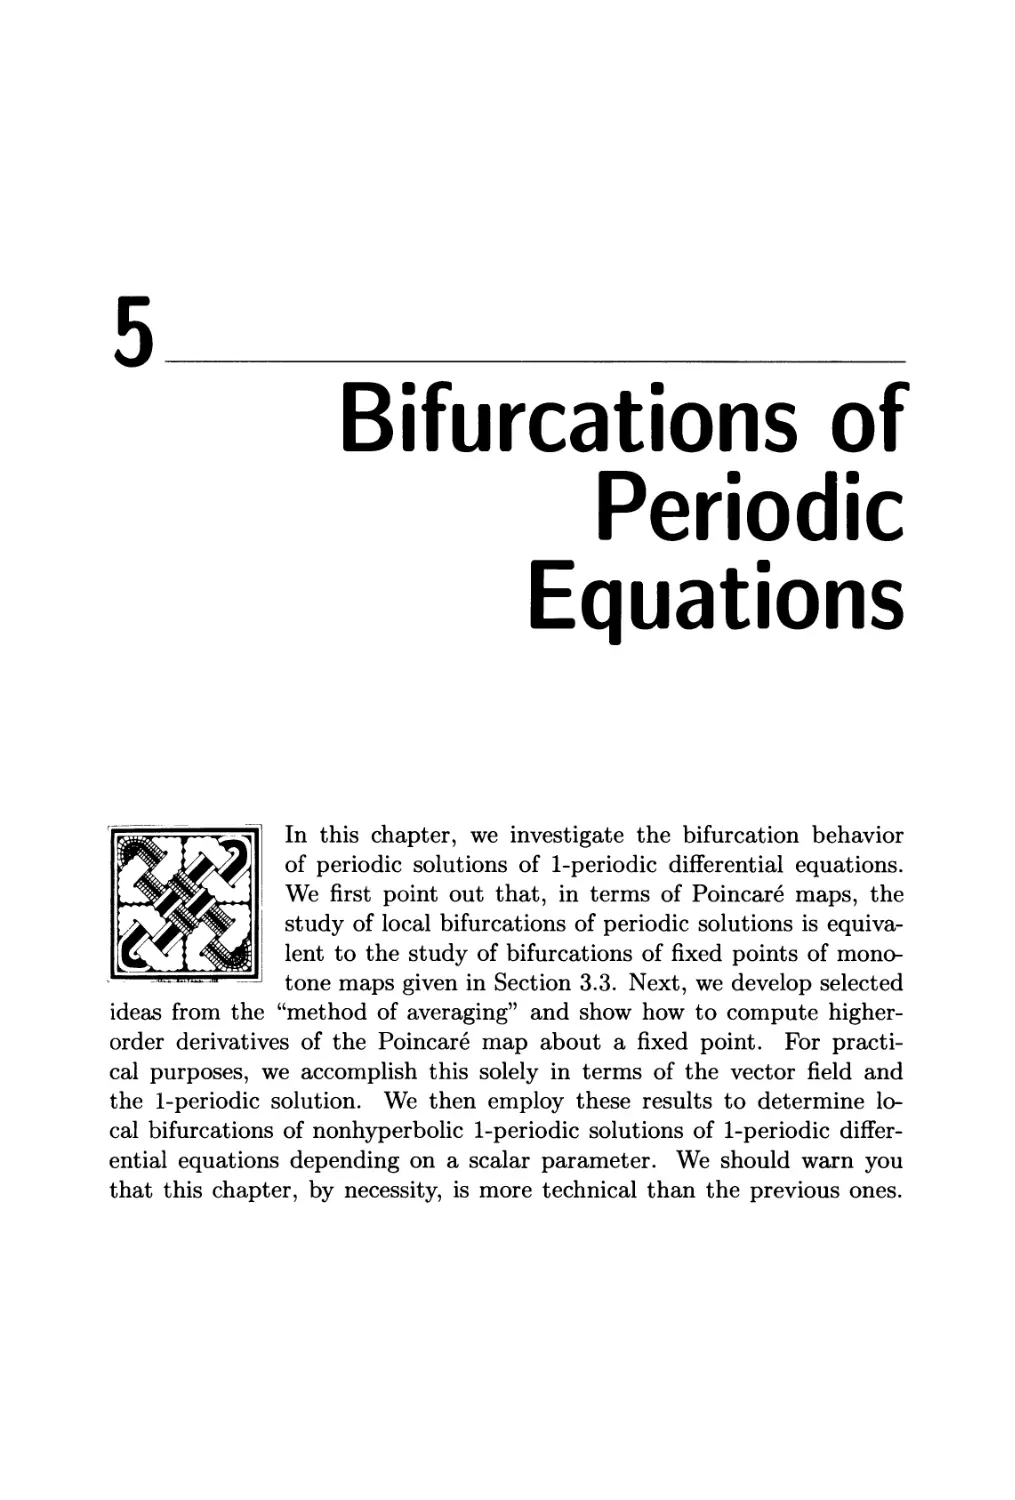 Chapter 5. Bifurcation of Periodic Equations